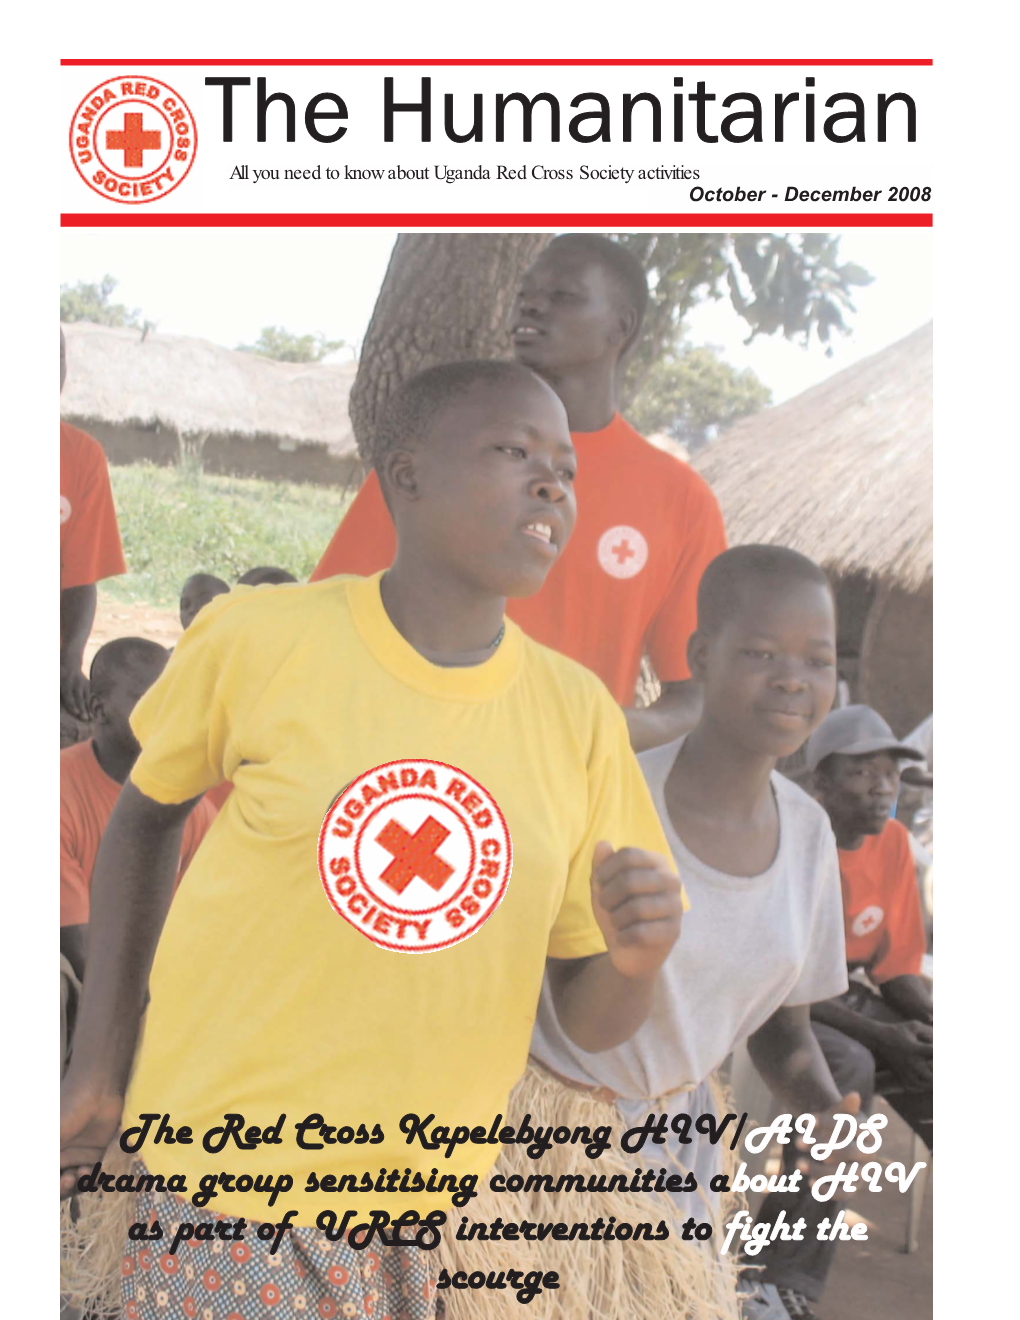 The Red Cross Kapelebyong HIV/AIDS Drama Group